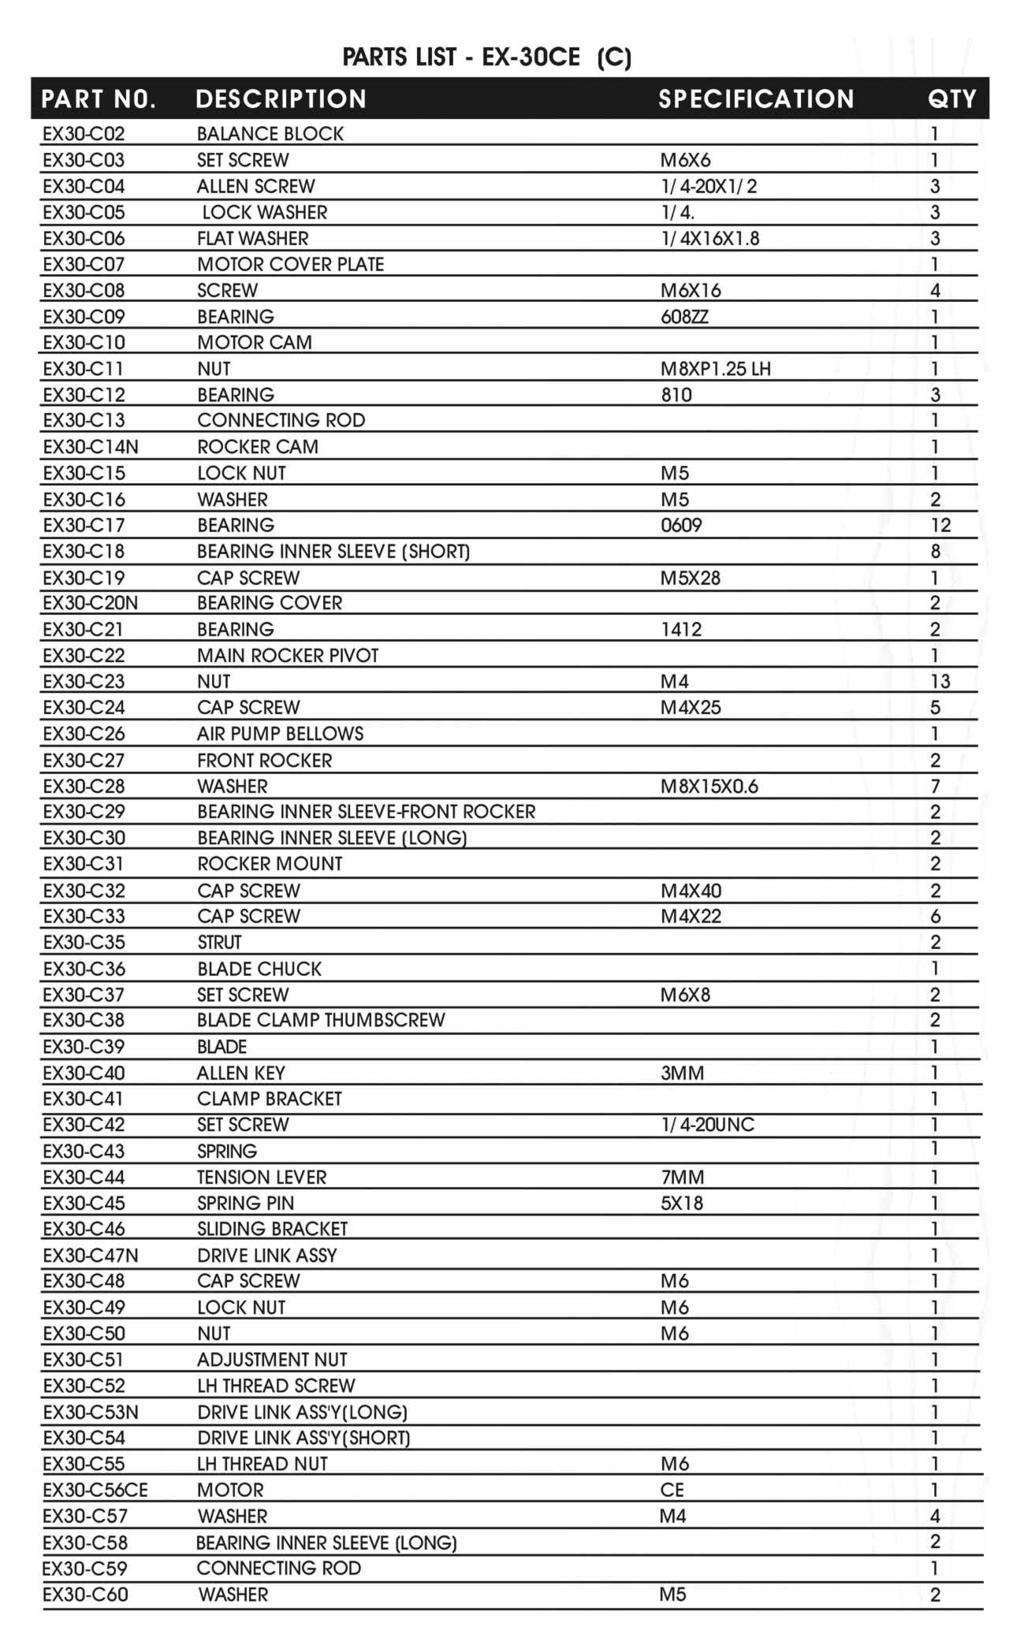 EX-30 Prts List (C).